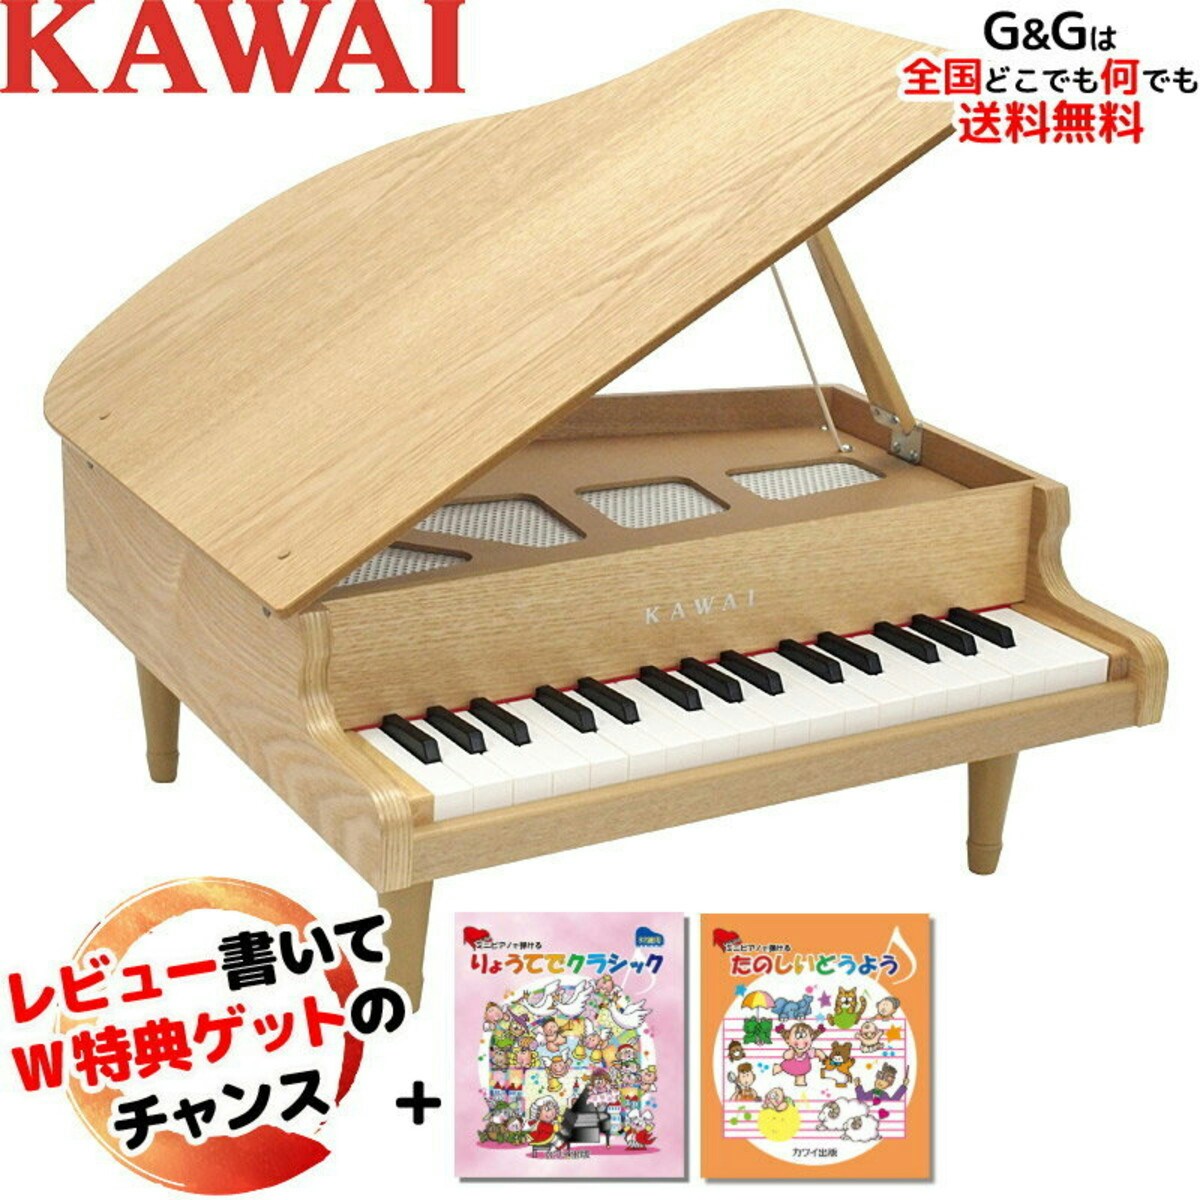 KAWAI(河合楽器製作所)グランドピアノ(木目調)タイプ